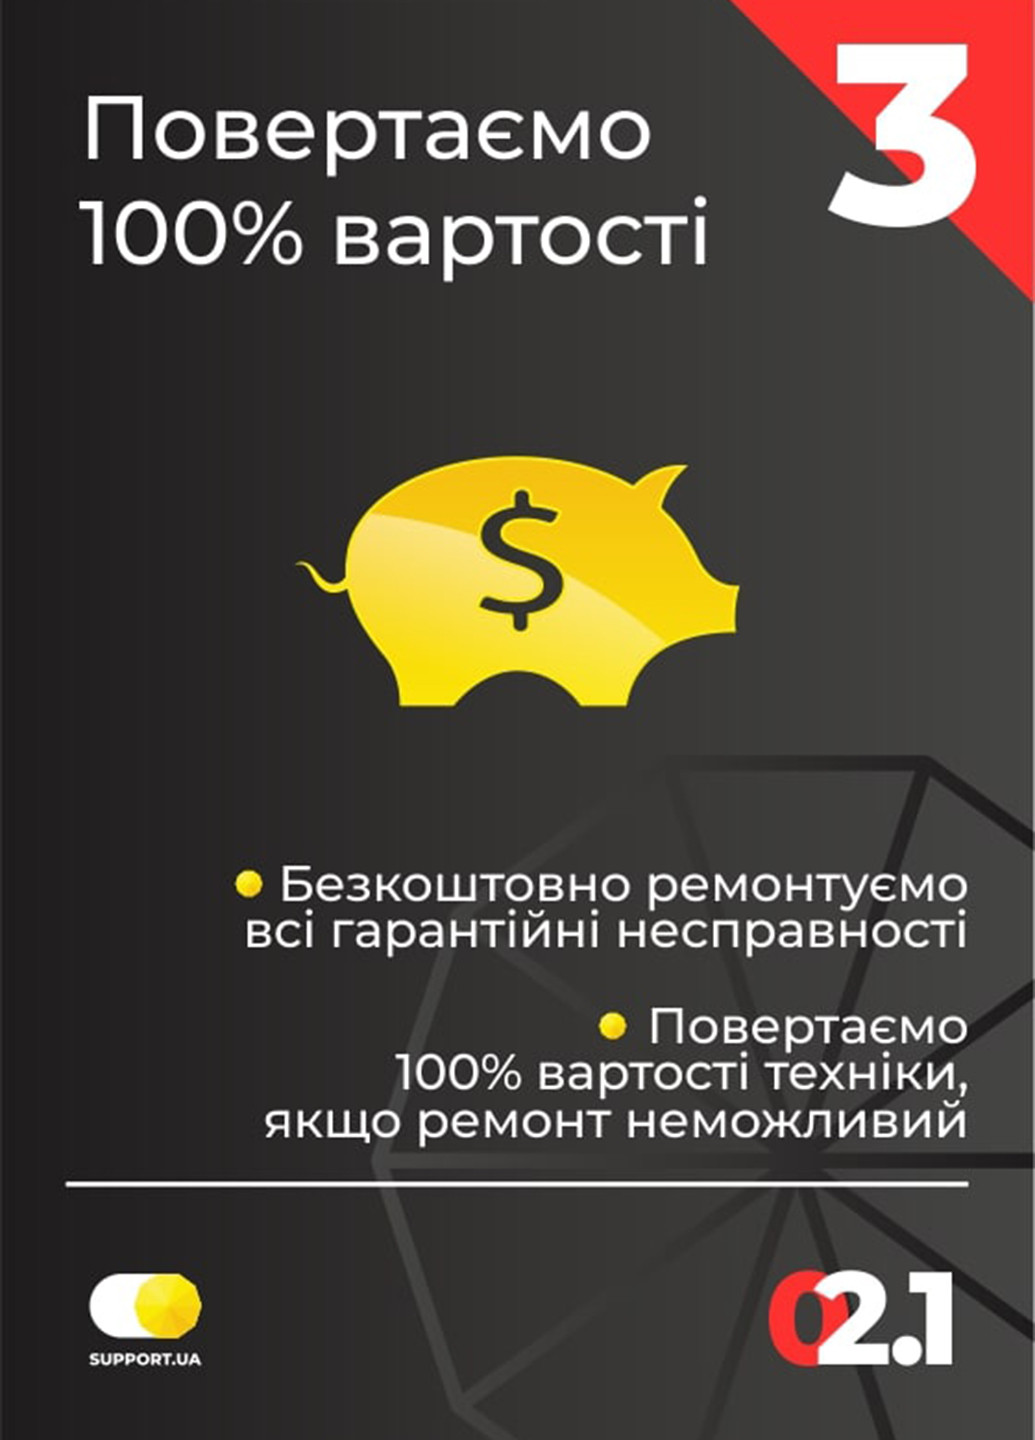 +2 года гарантии (2001-3000), Электронный сертификат от Support.ua